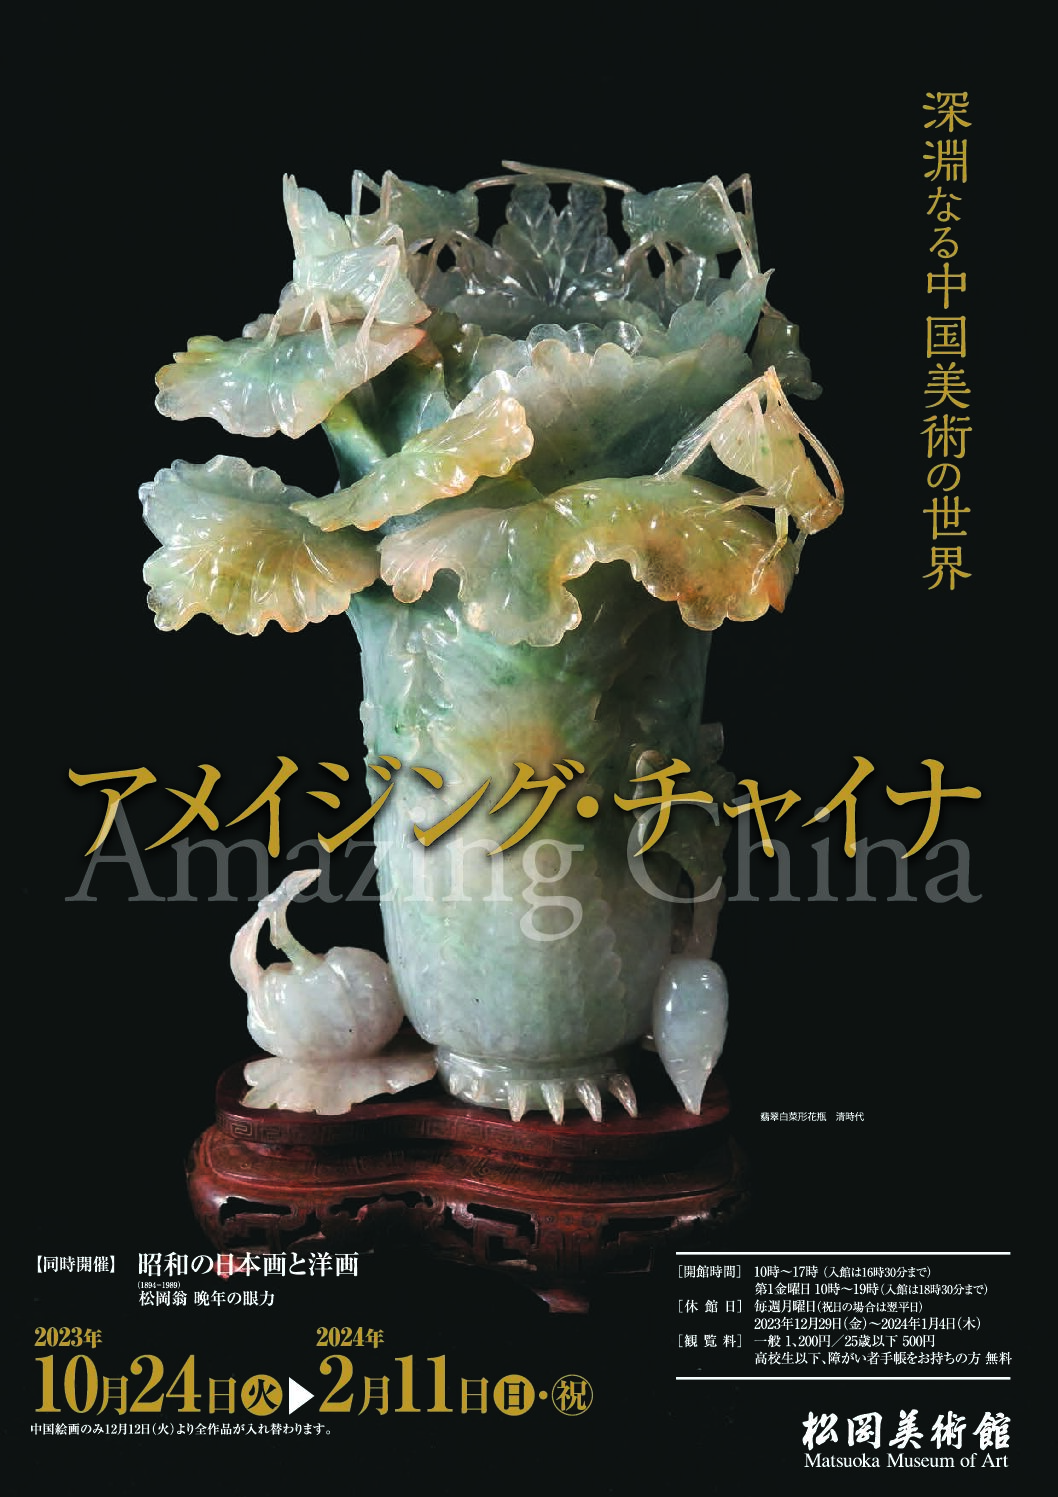 Amazing China - The Profound World of Chinese Art （Matsuoka